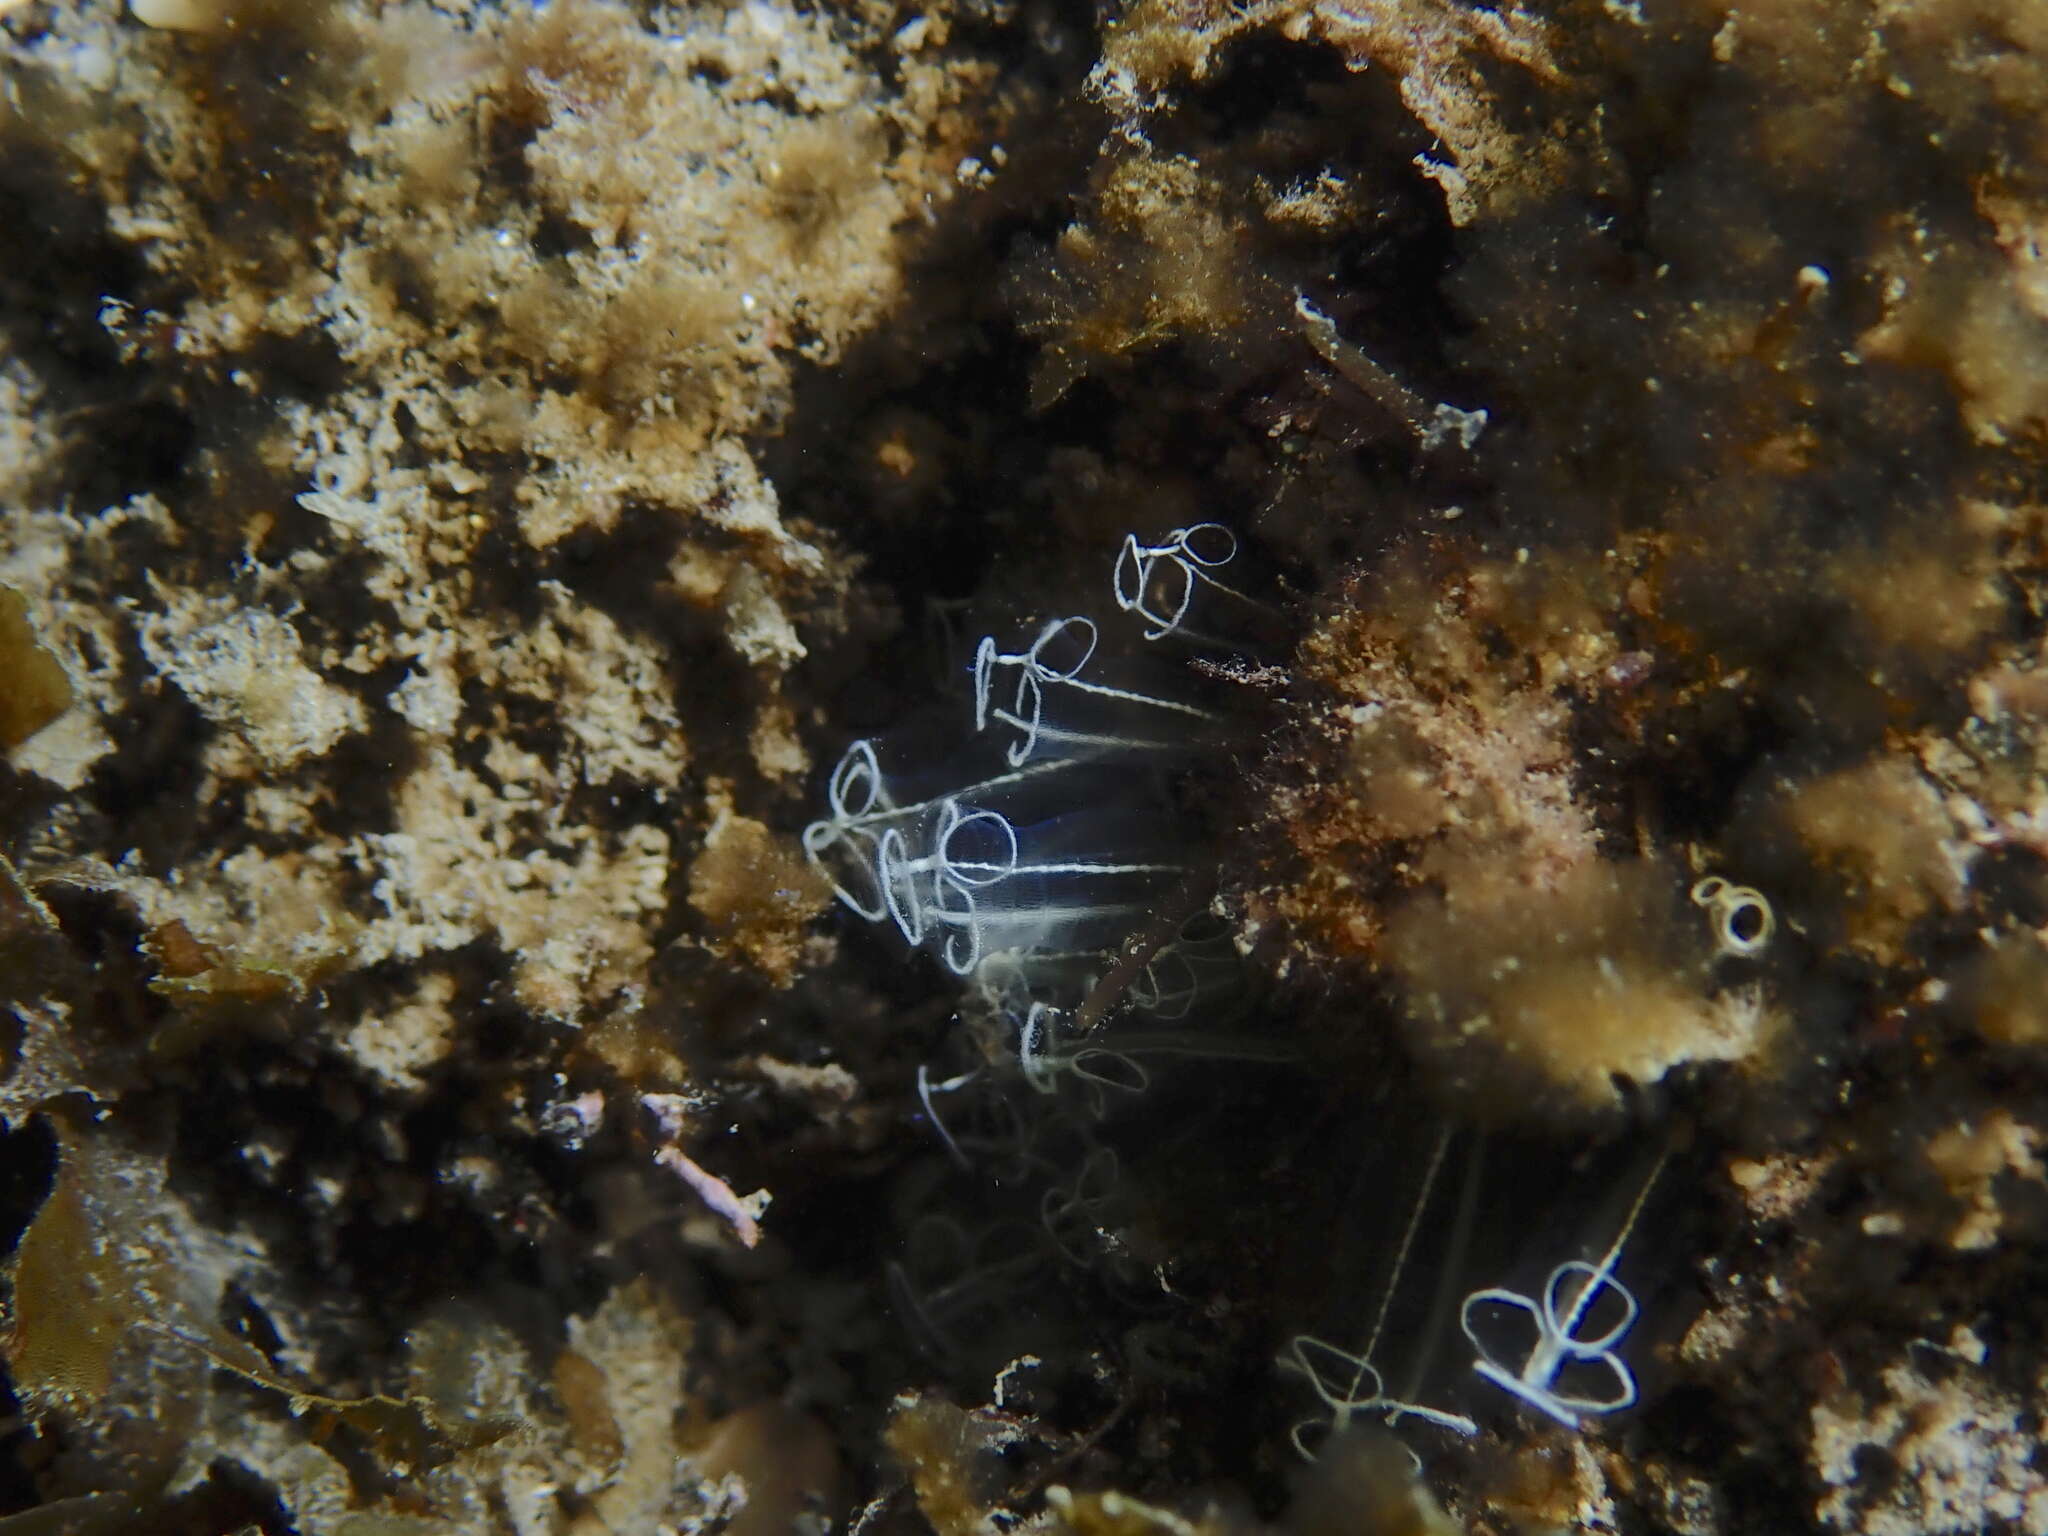 Image of Light-bulb sea squirt